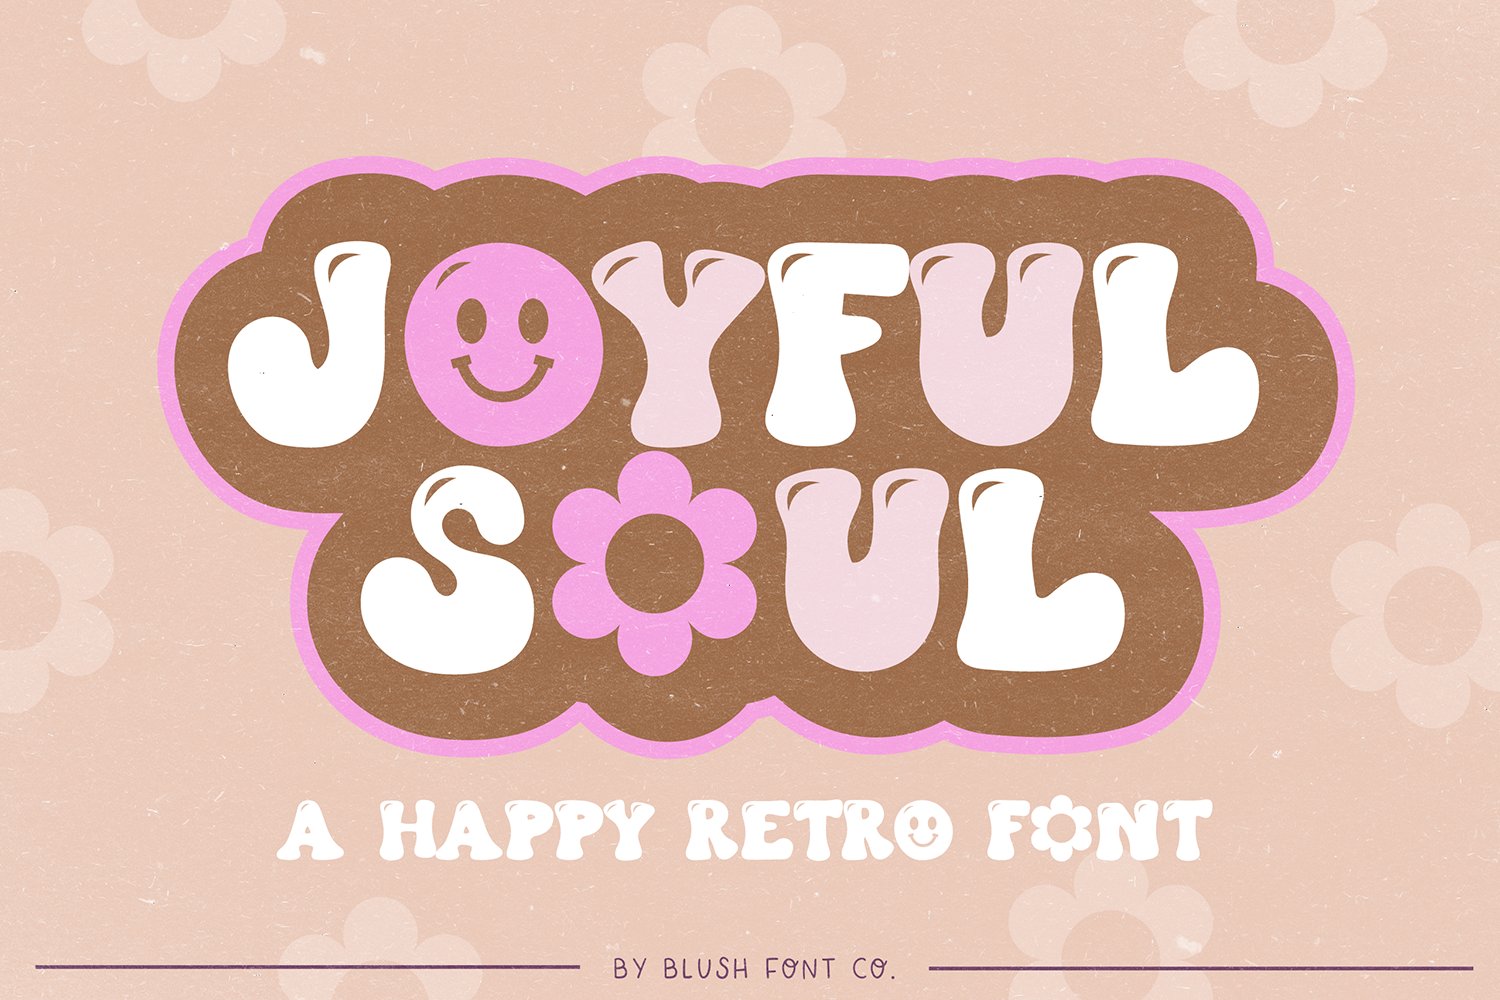 JOYFUL SOUL Happy Retro Font cover image.